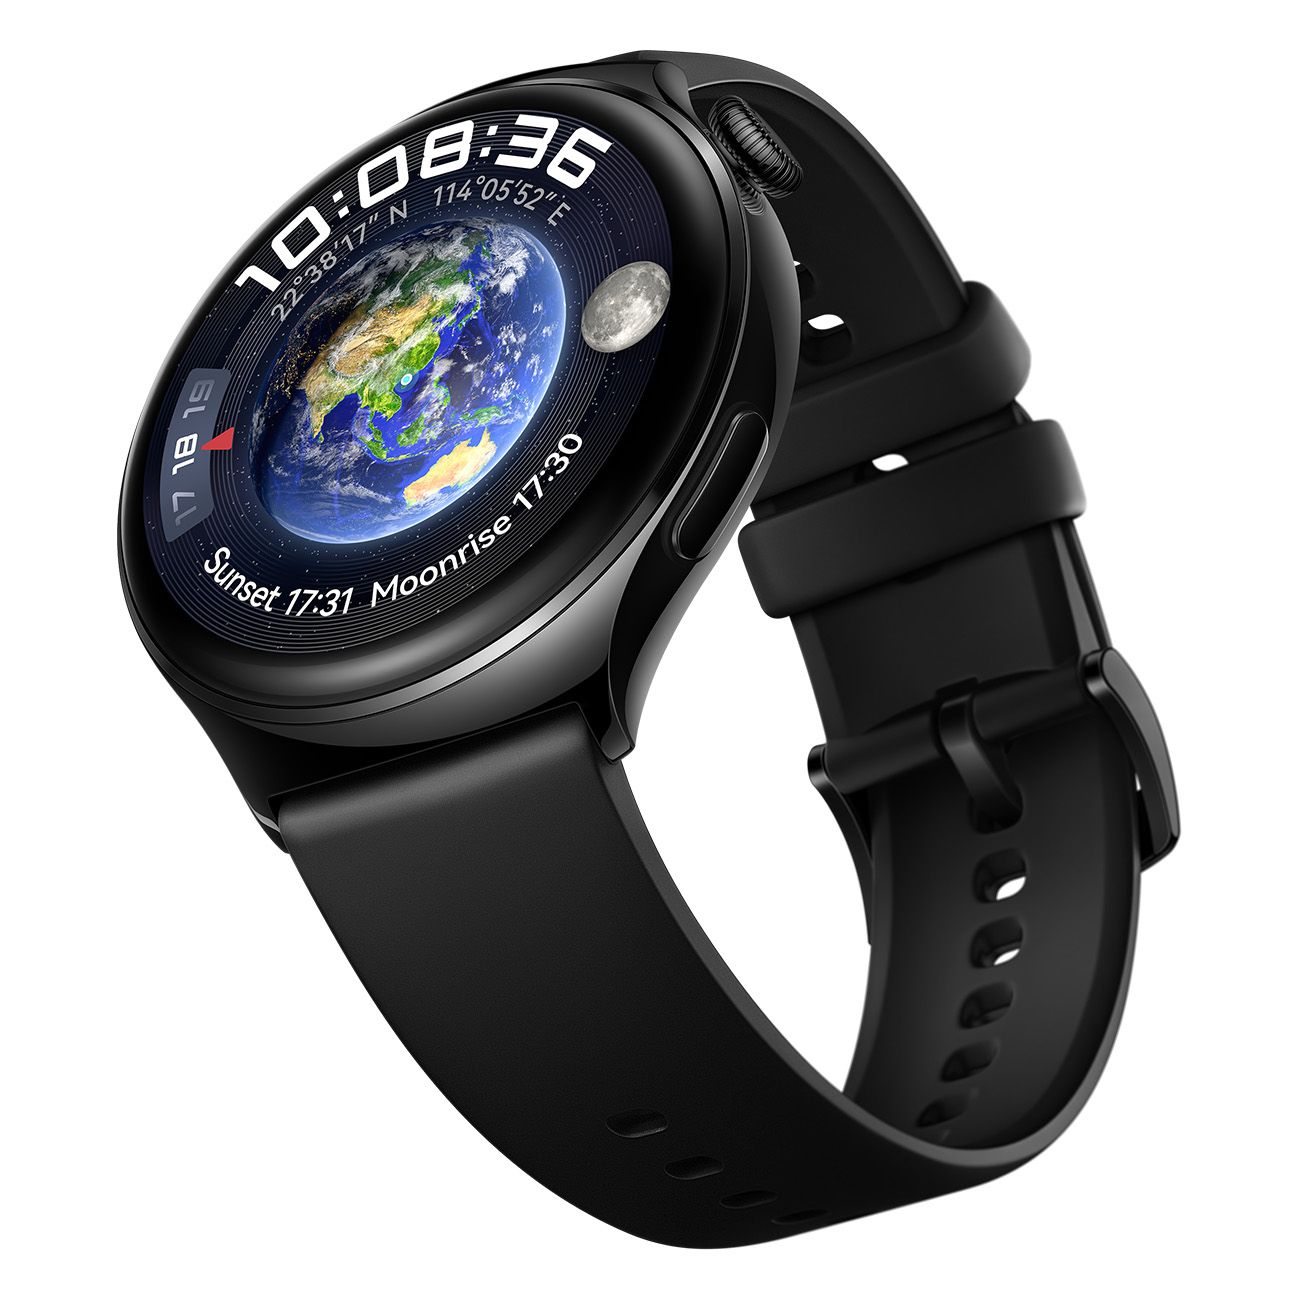 Huawei Watch 4 Active Smartwatch